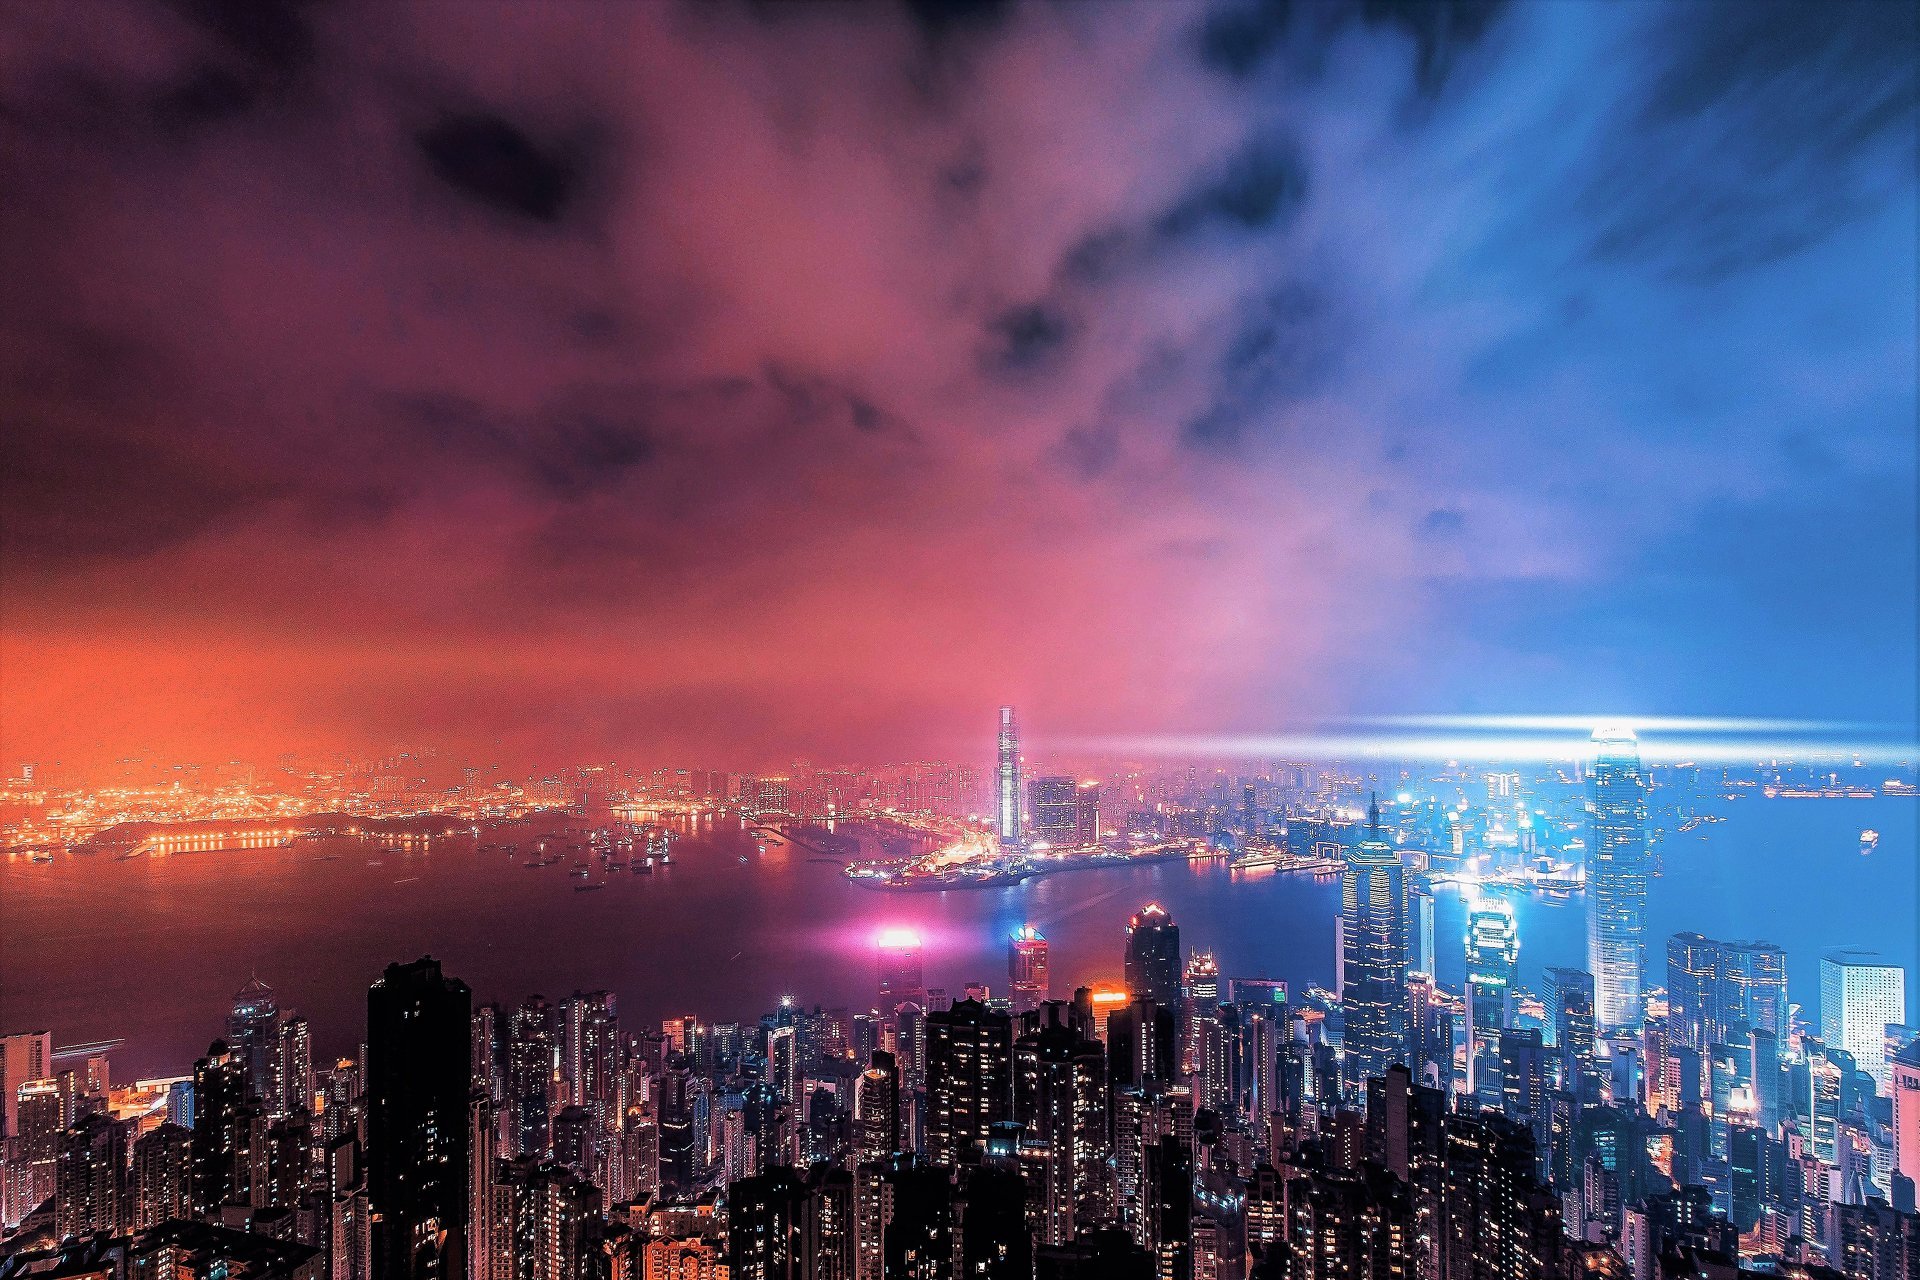 Hong Kong on a Cloudy Night